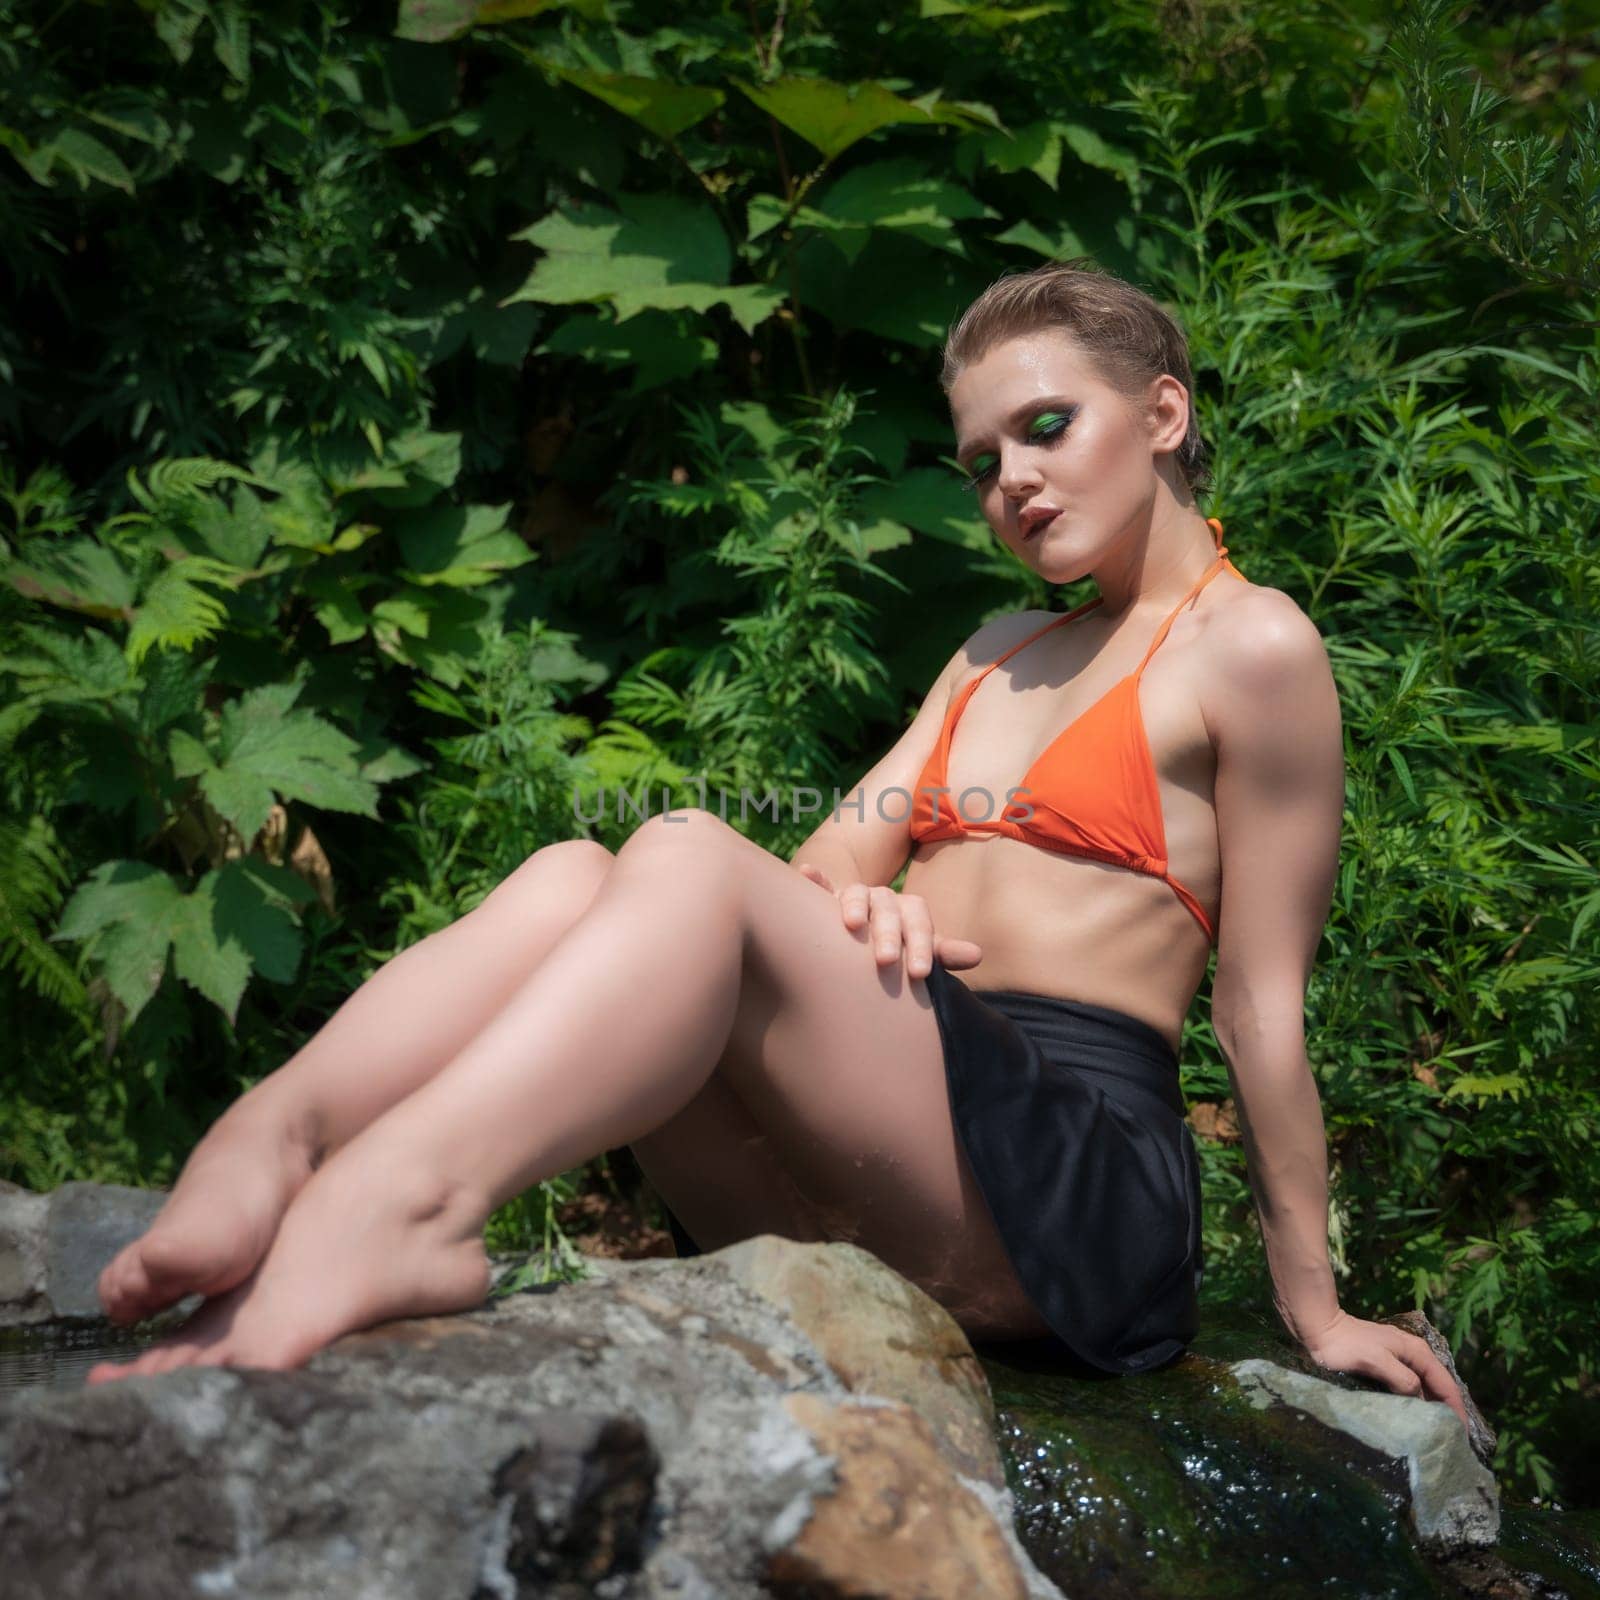 Woman relaxing on edge of outdoor pool with geothermal water, dressed orange bikini top, mini skirt by Alexander-Piragis